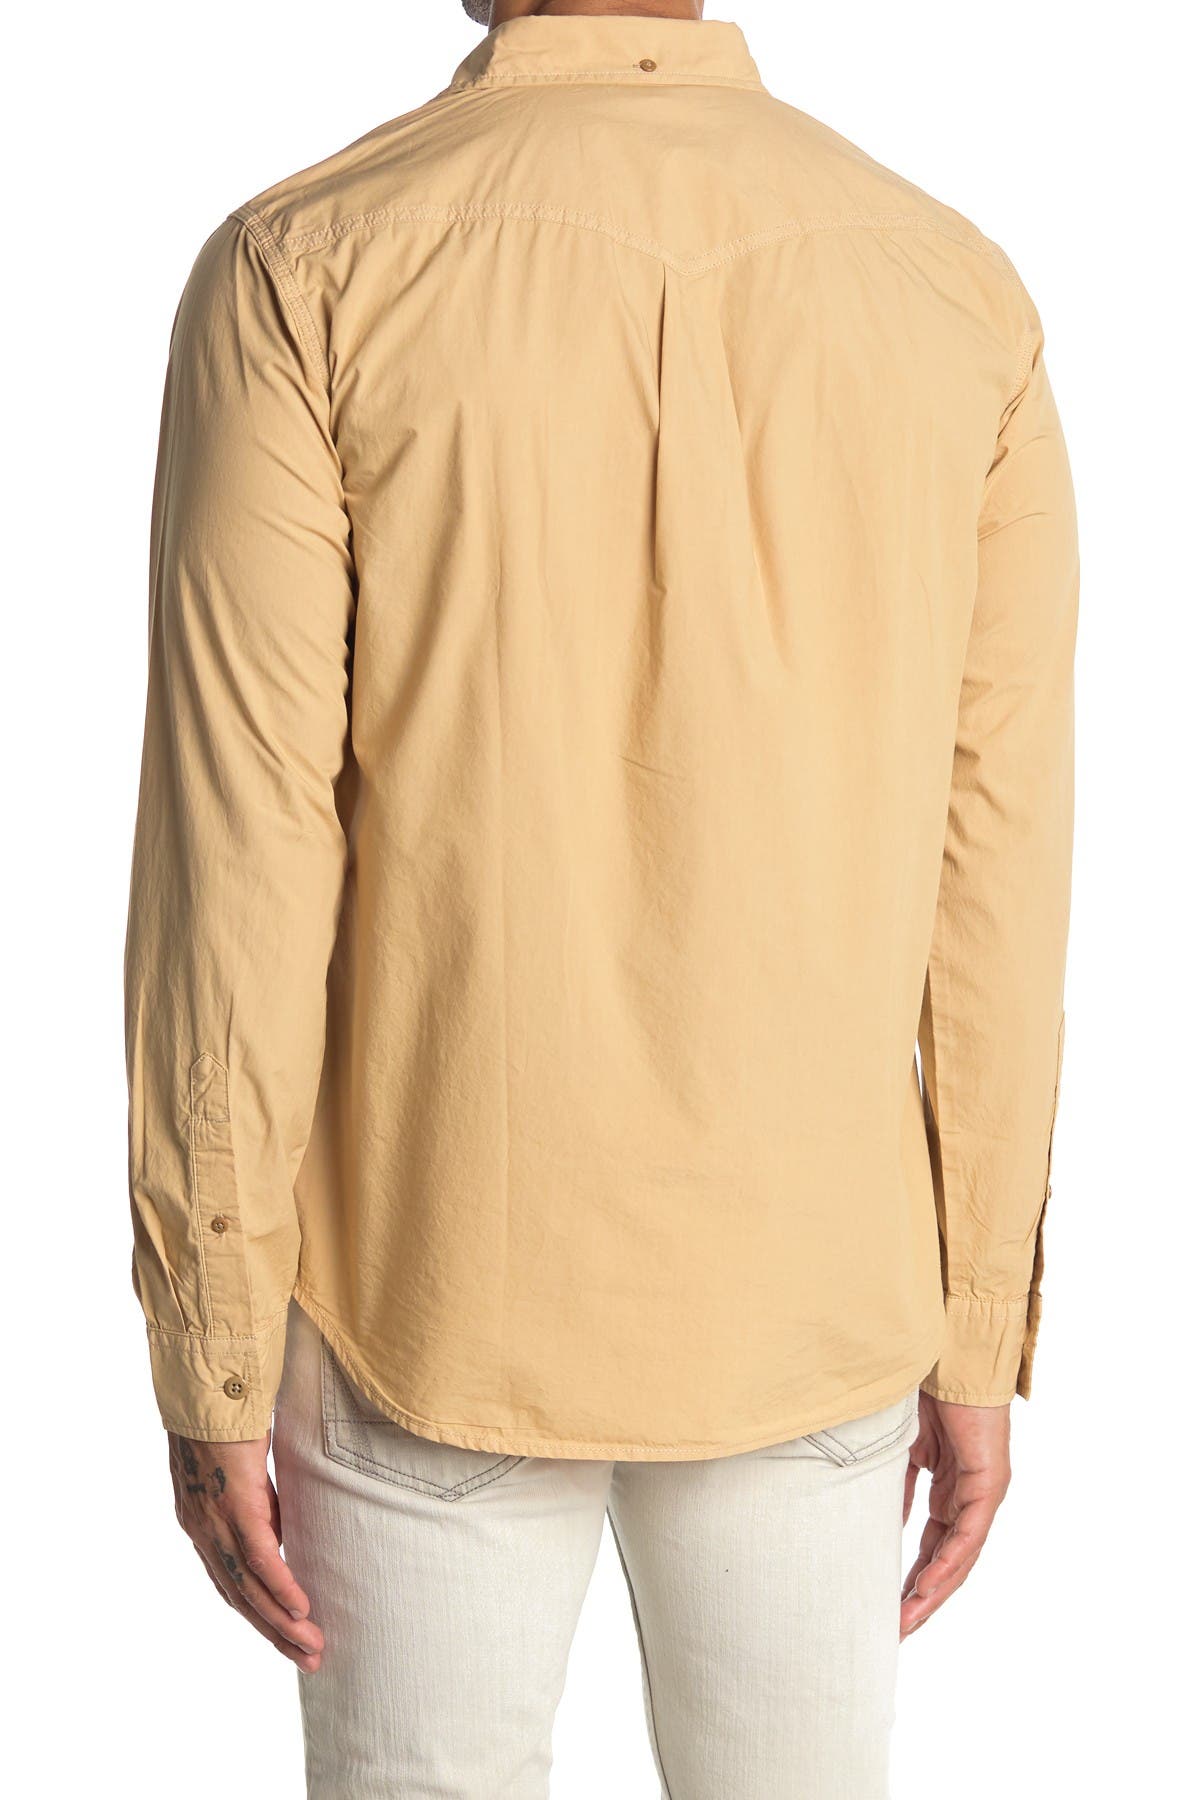 Alex Mill Patch Pocket Regular Fit Field Shirt In Light Beige